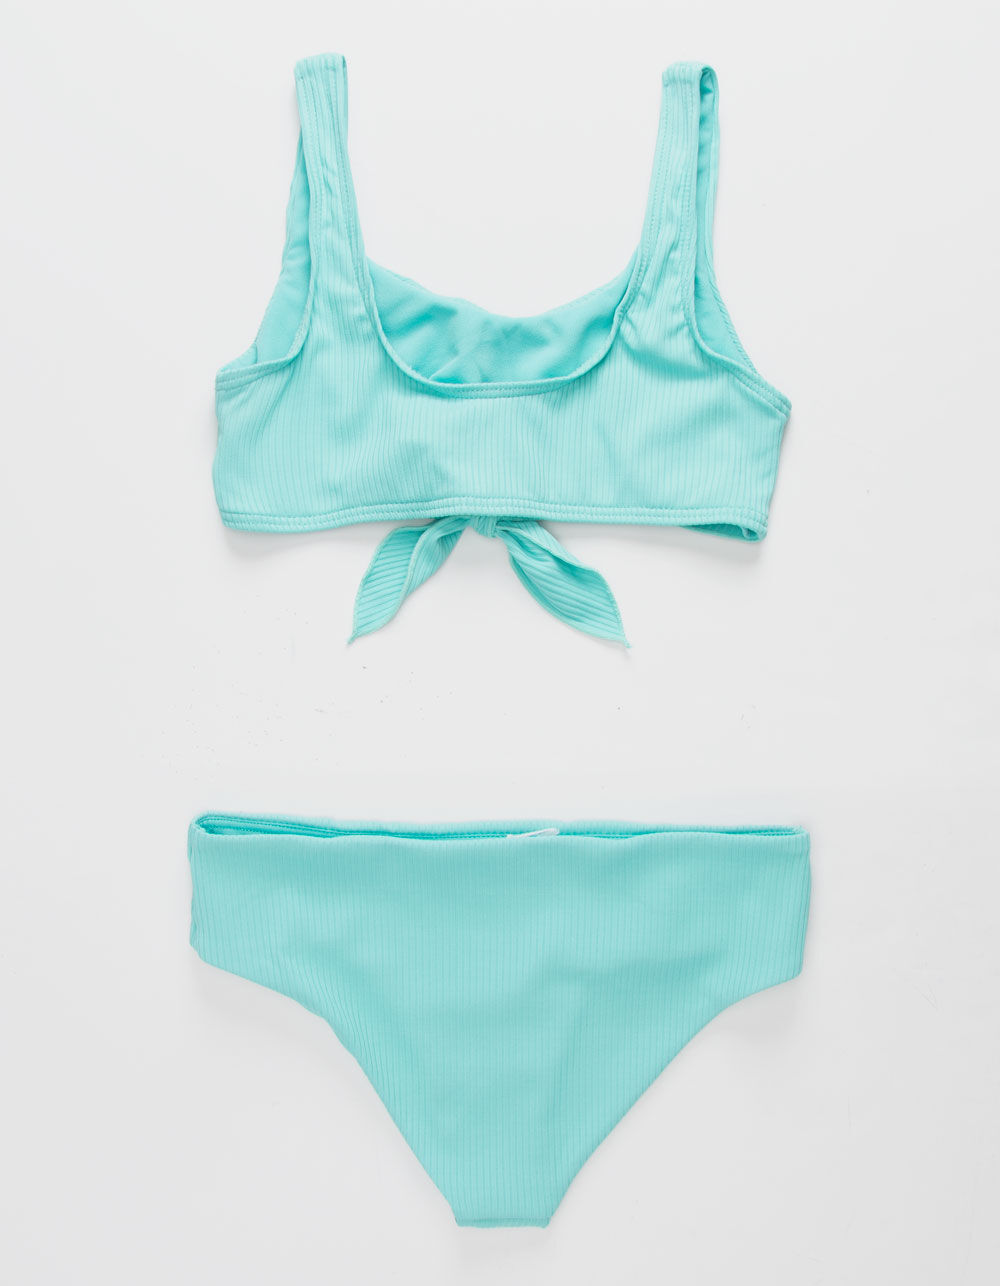 DAMSEL Scoop Bralette Knot Front Turquoise Girls Bikini Set - TURQUOISE ...